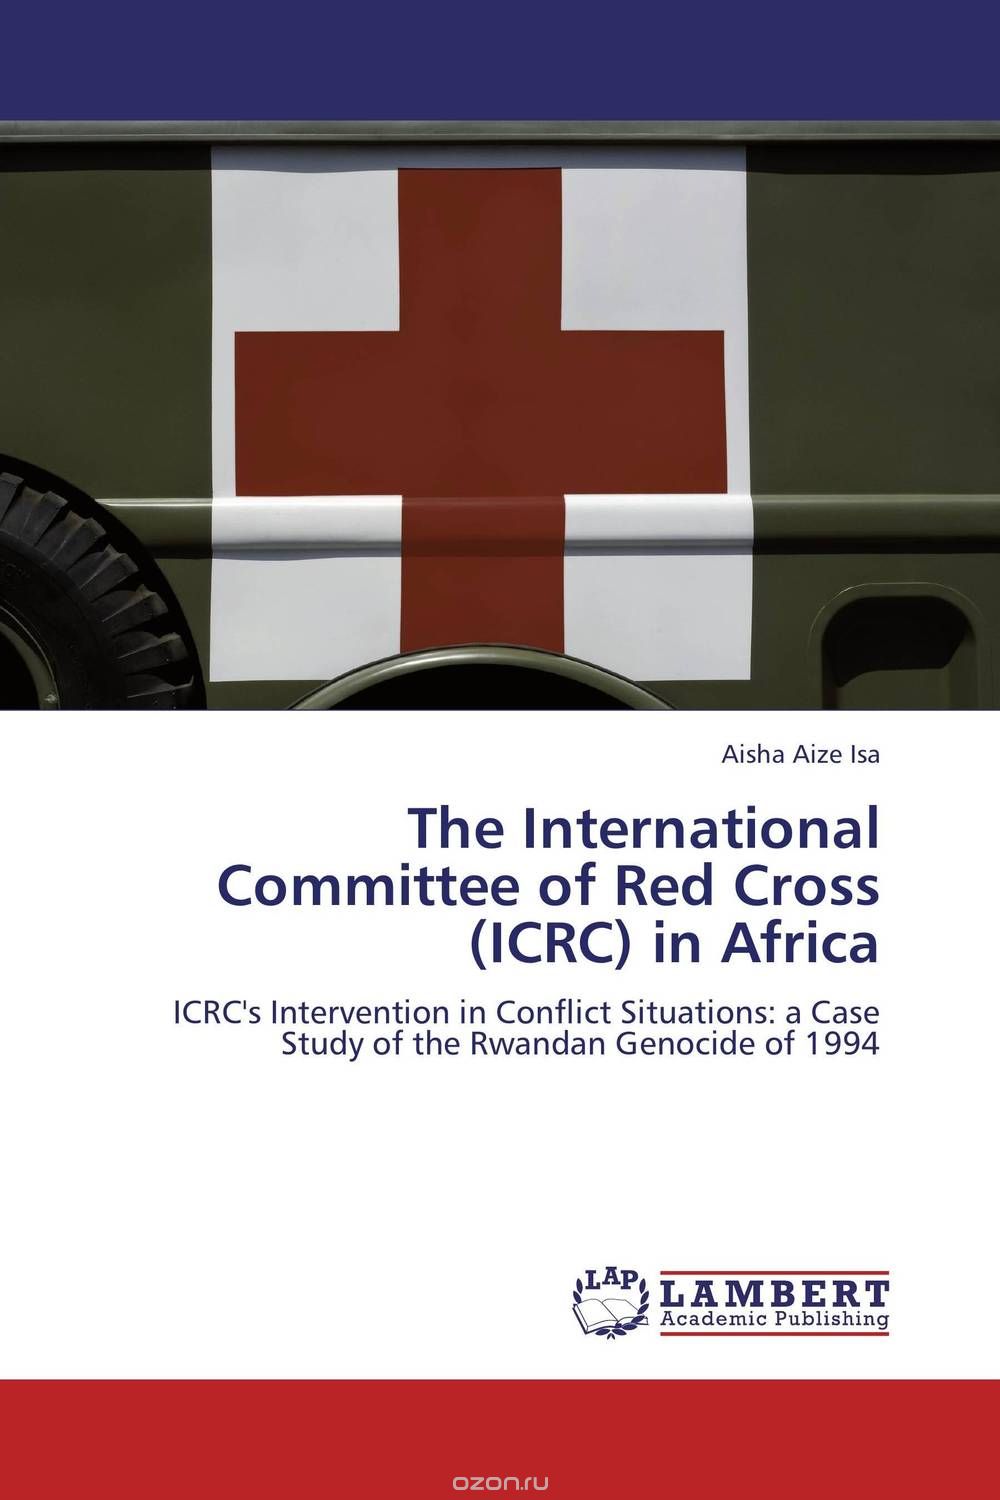 Скачать книгу "The International Committee of Red Cross (ICRC) in Africa"